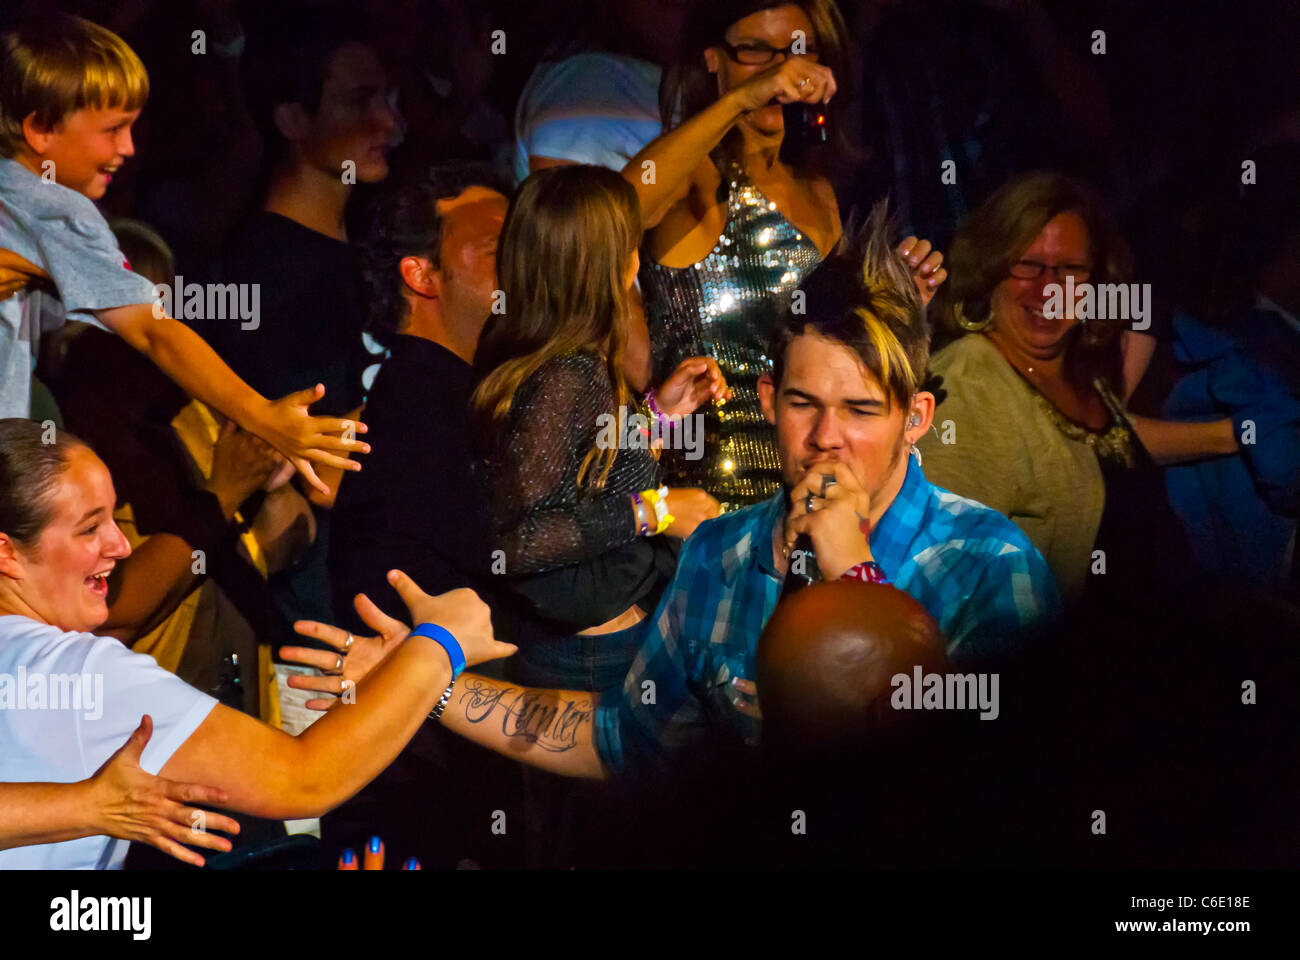 James Durbin singing, arm tattoo seen, lit by spotlight, walking among fans, American Idol Season 10 Concert, NY 2011 Stock Photo